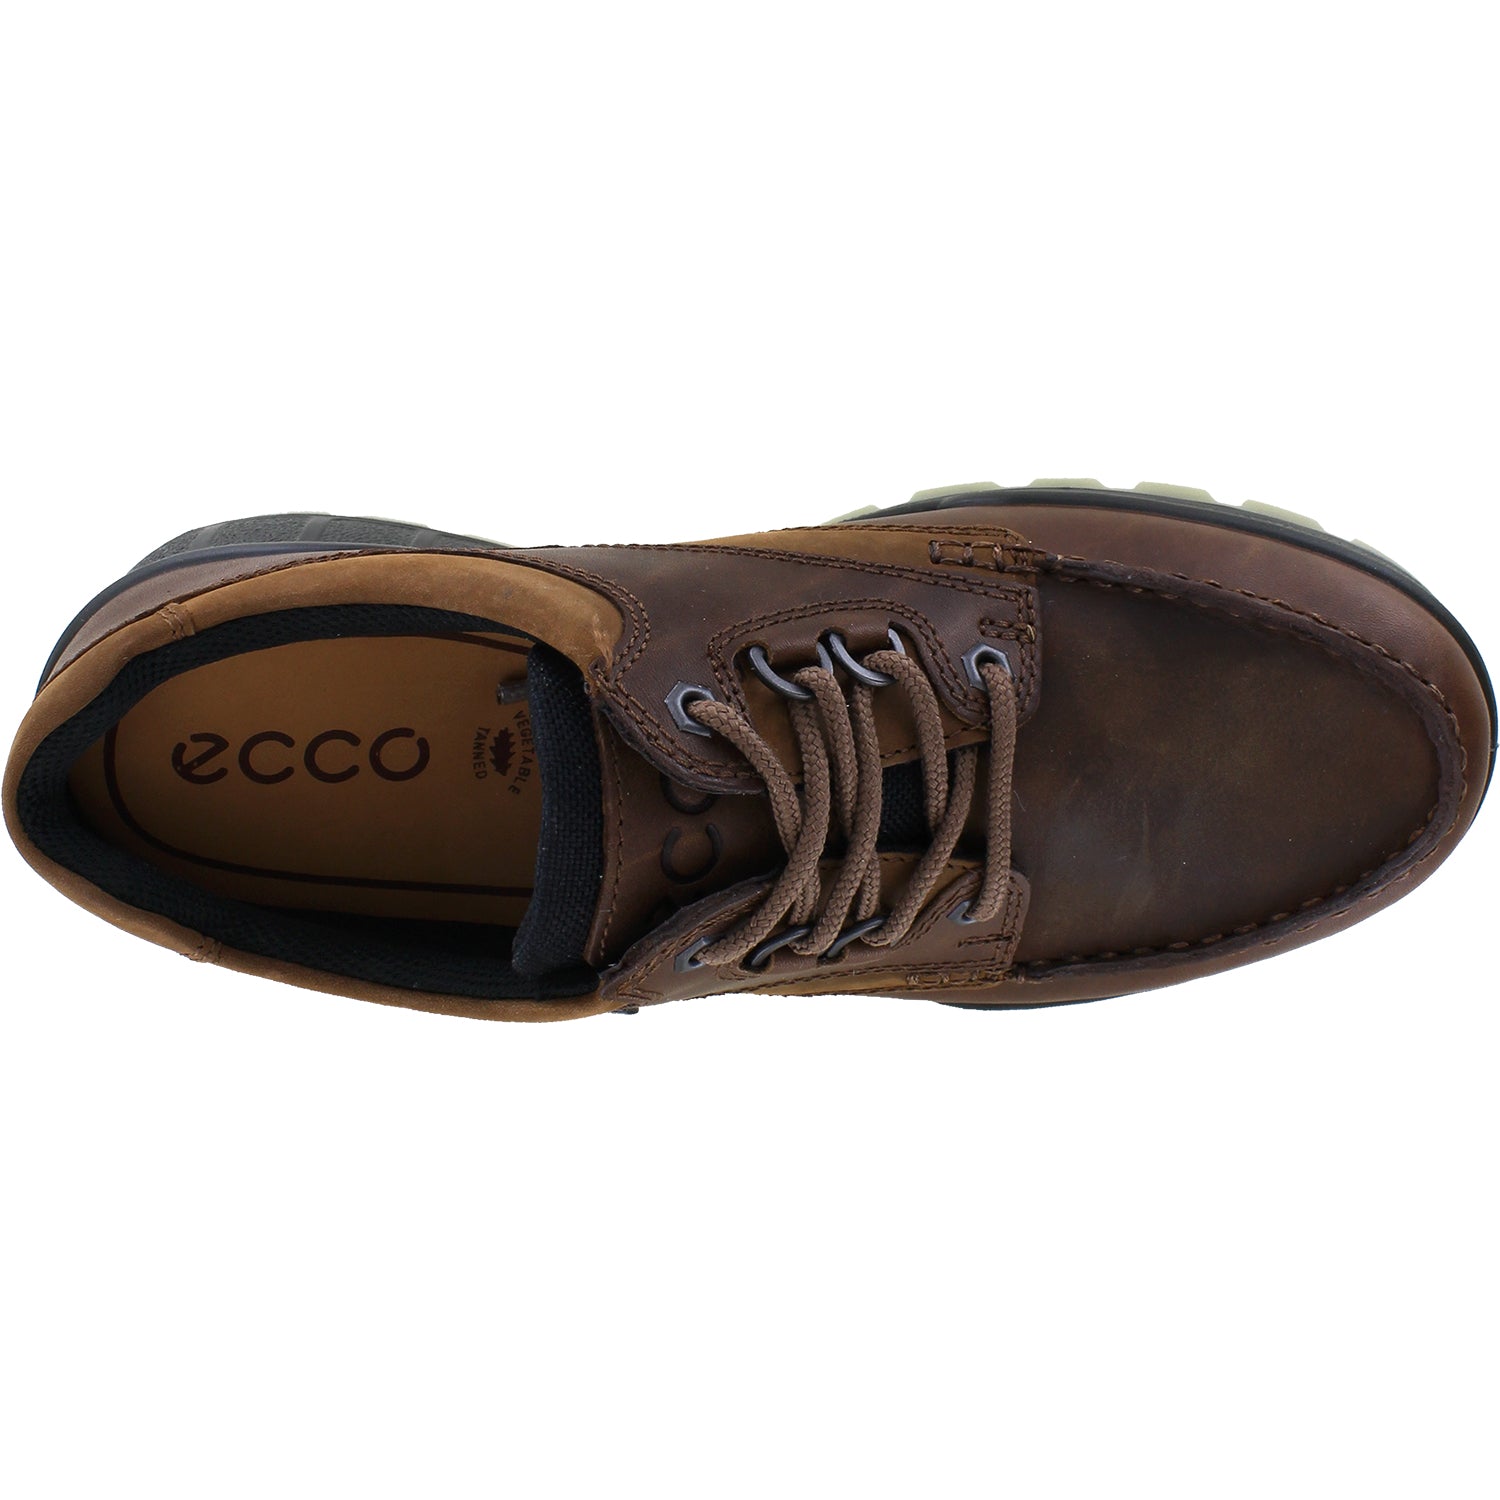 ECCO USA INC ECCO TRACK 25 M HIGH - 831704-52600 – Hudson Shoe Store